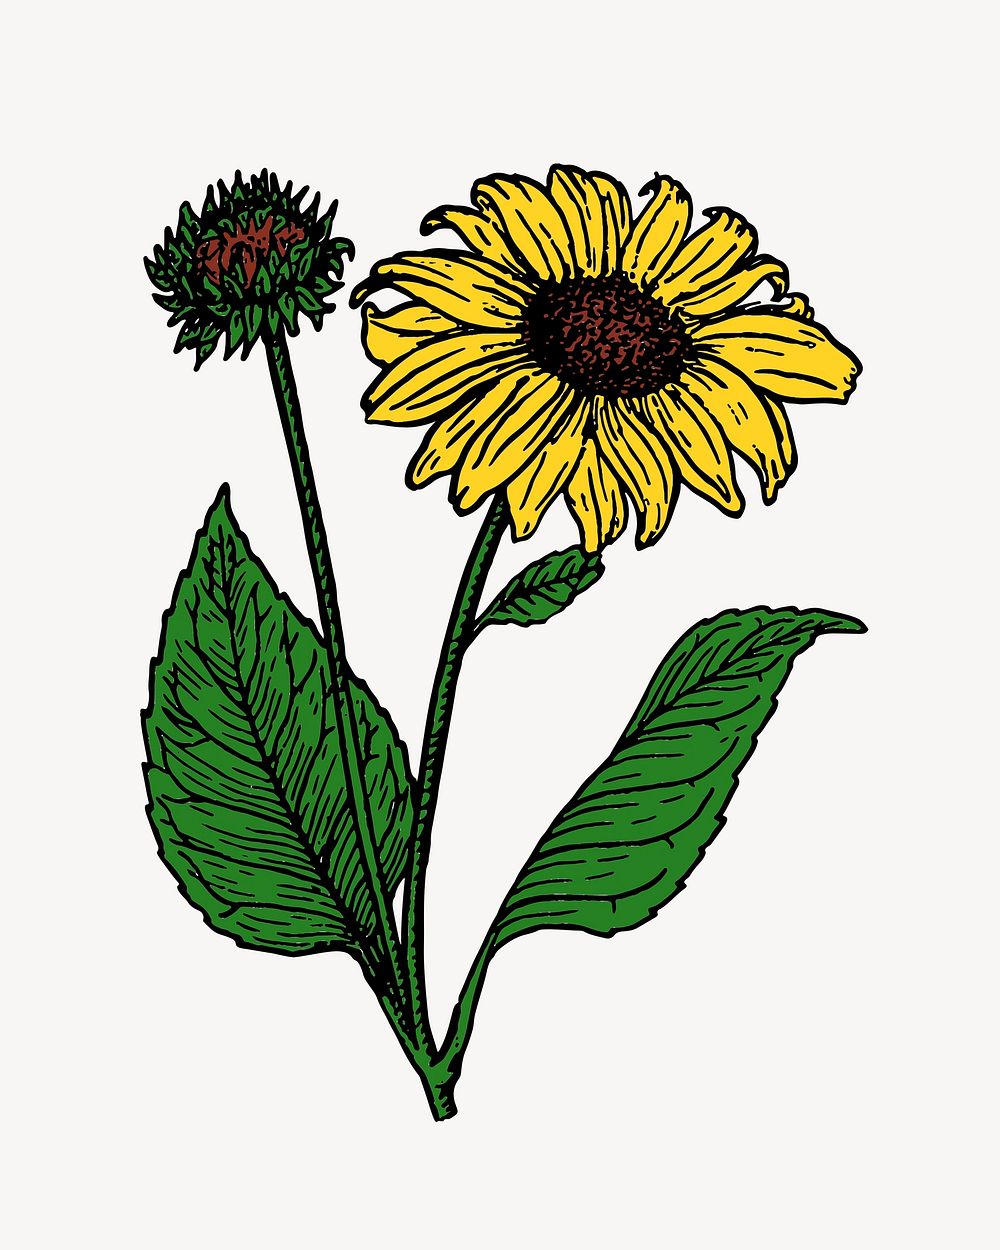 Sunflower illustration psd. Free public domain CC0 image.